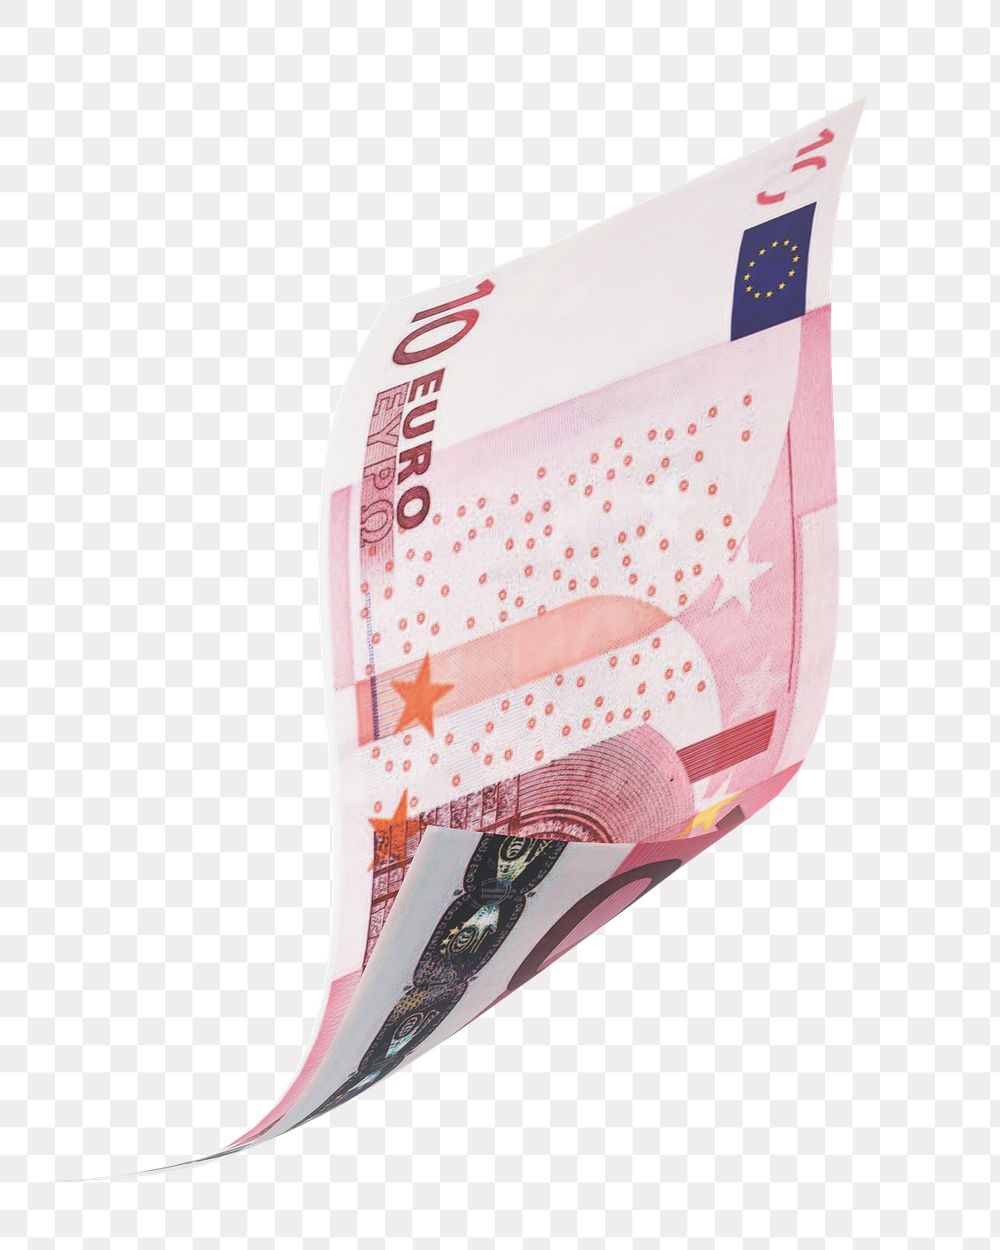 Png 10 Euros bank note, transparent background